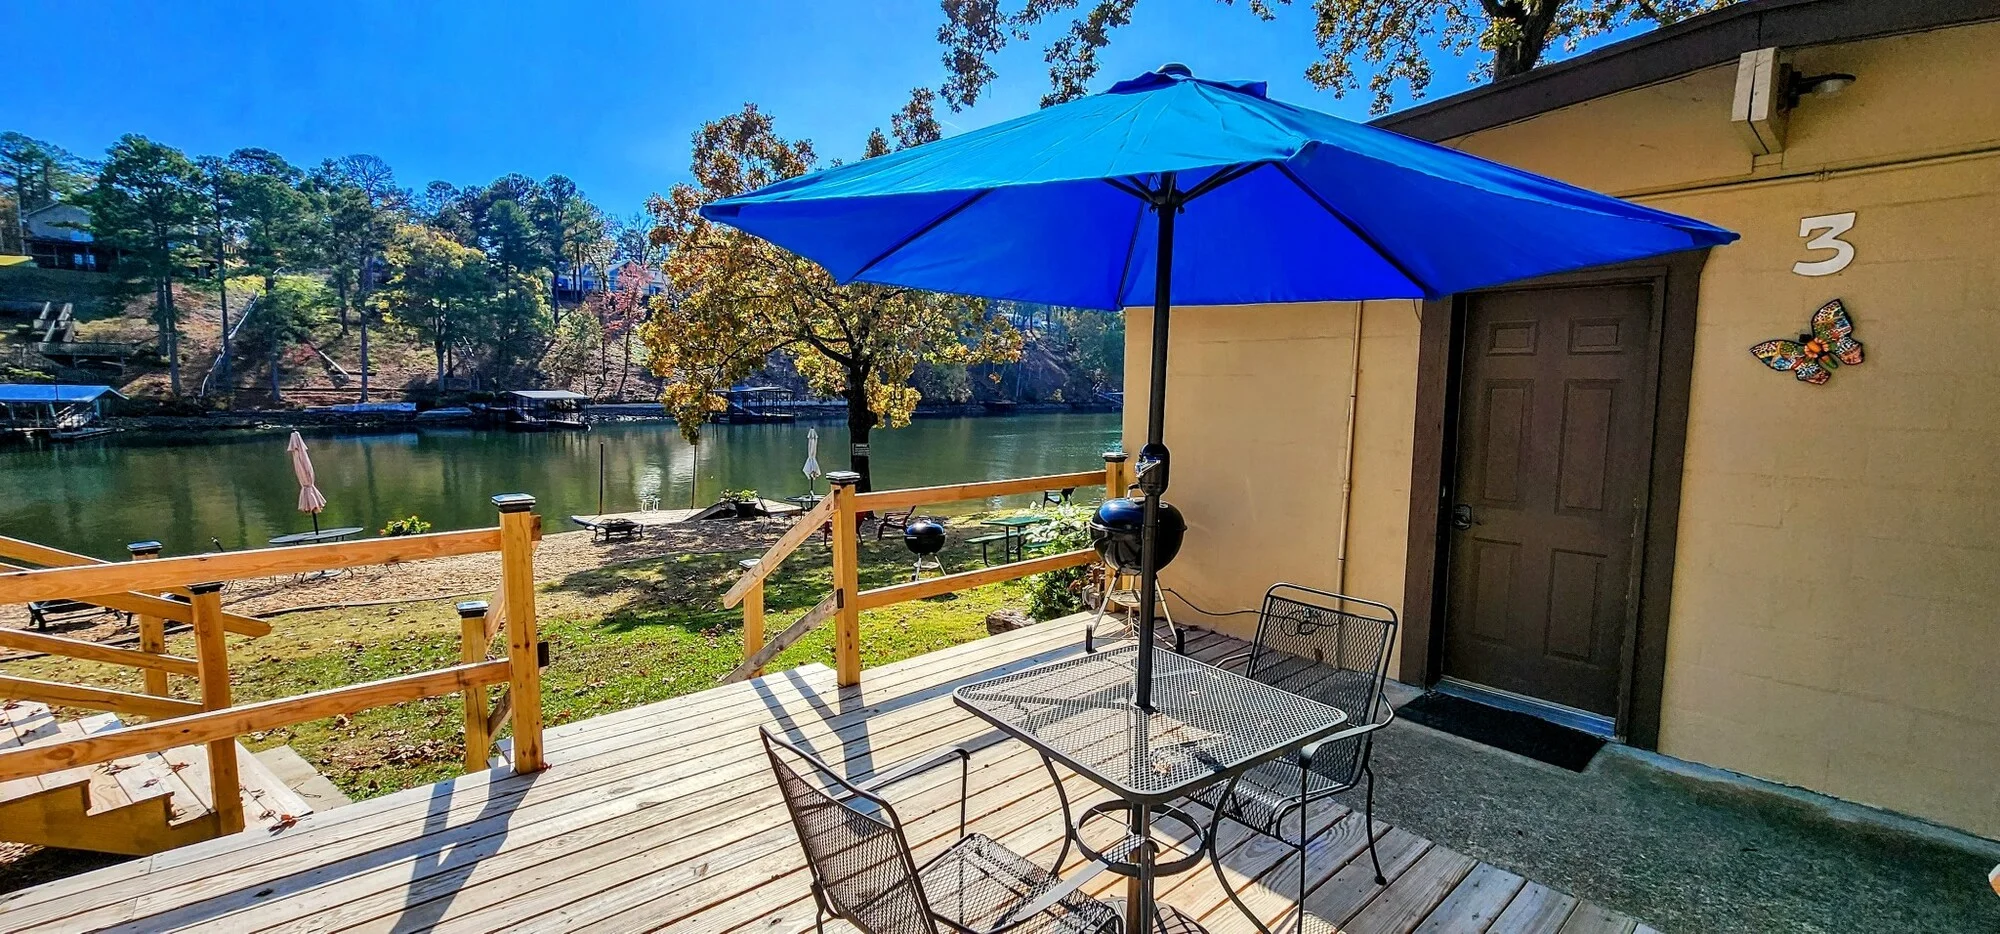 Cabin with a blue outdoor umbrella